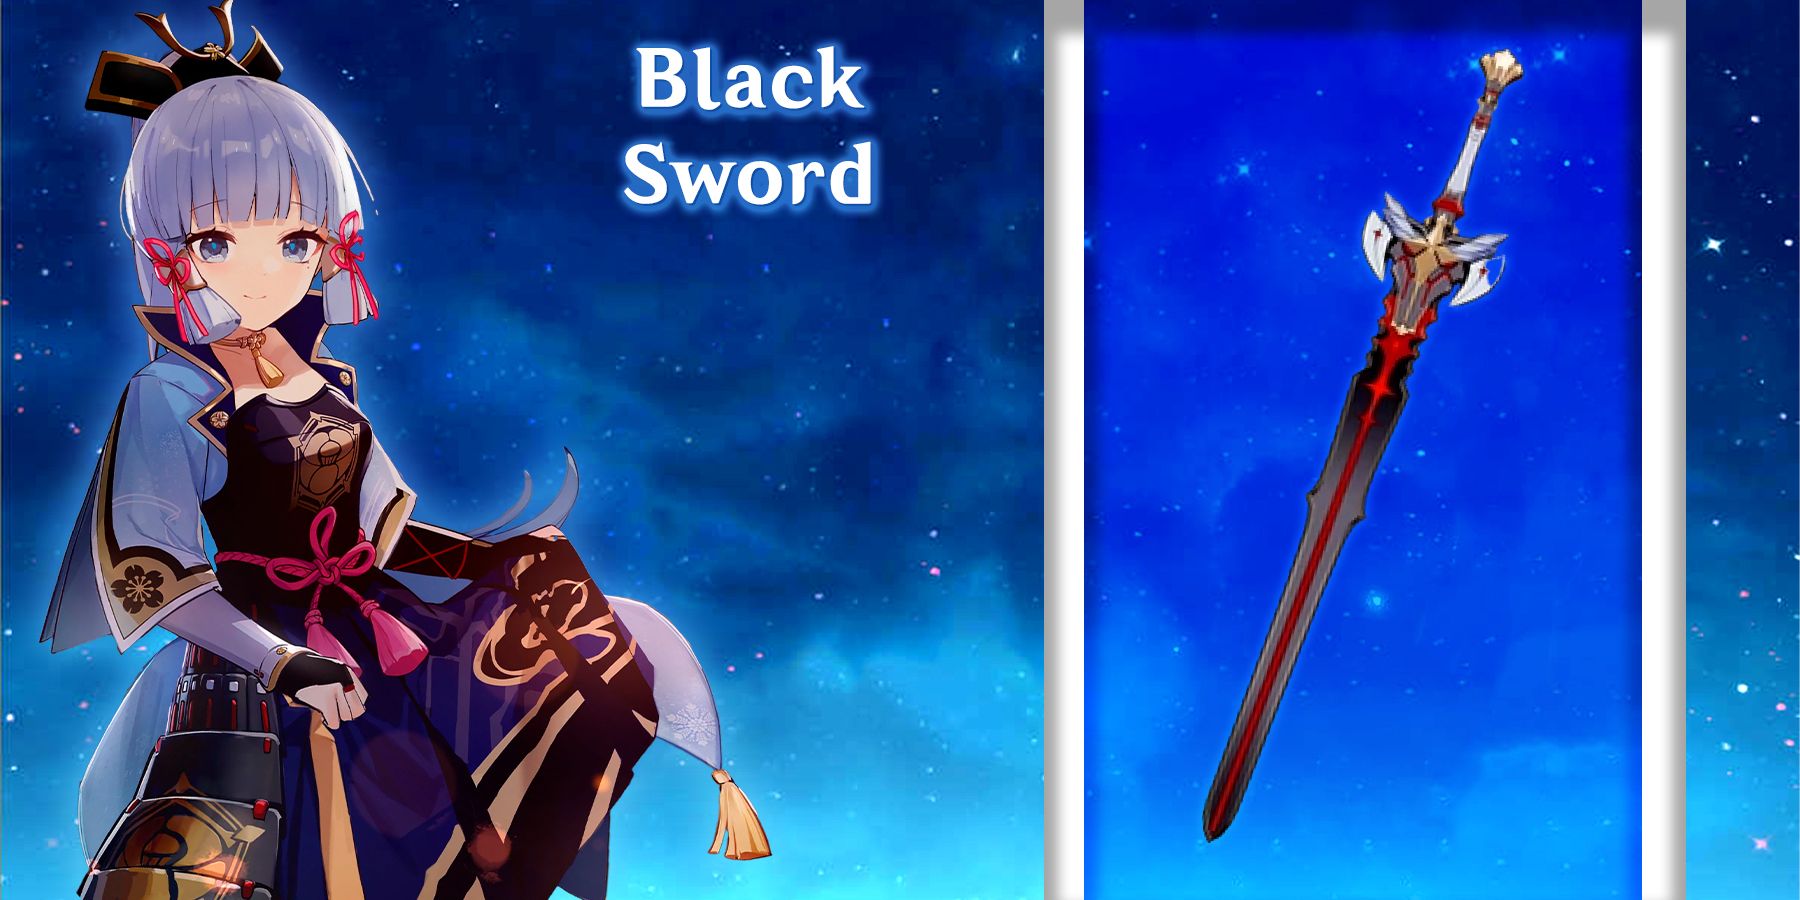 ayaka holding black sword in genshin impact